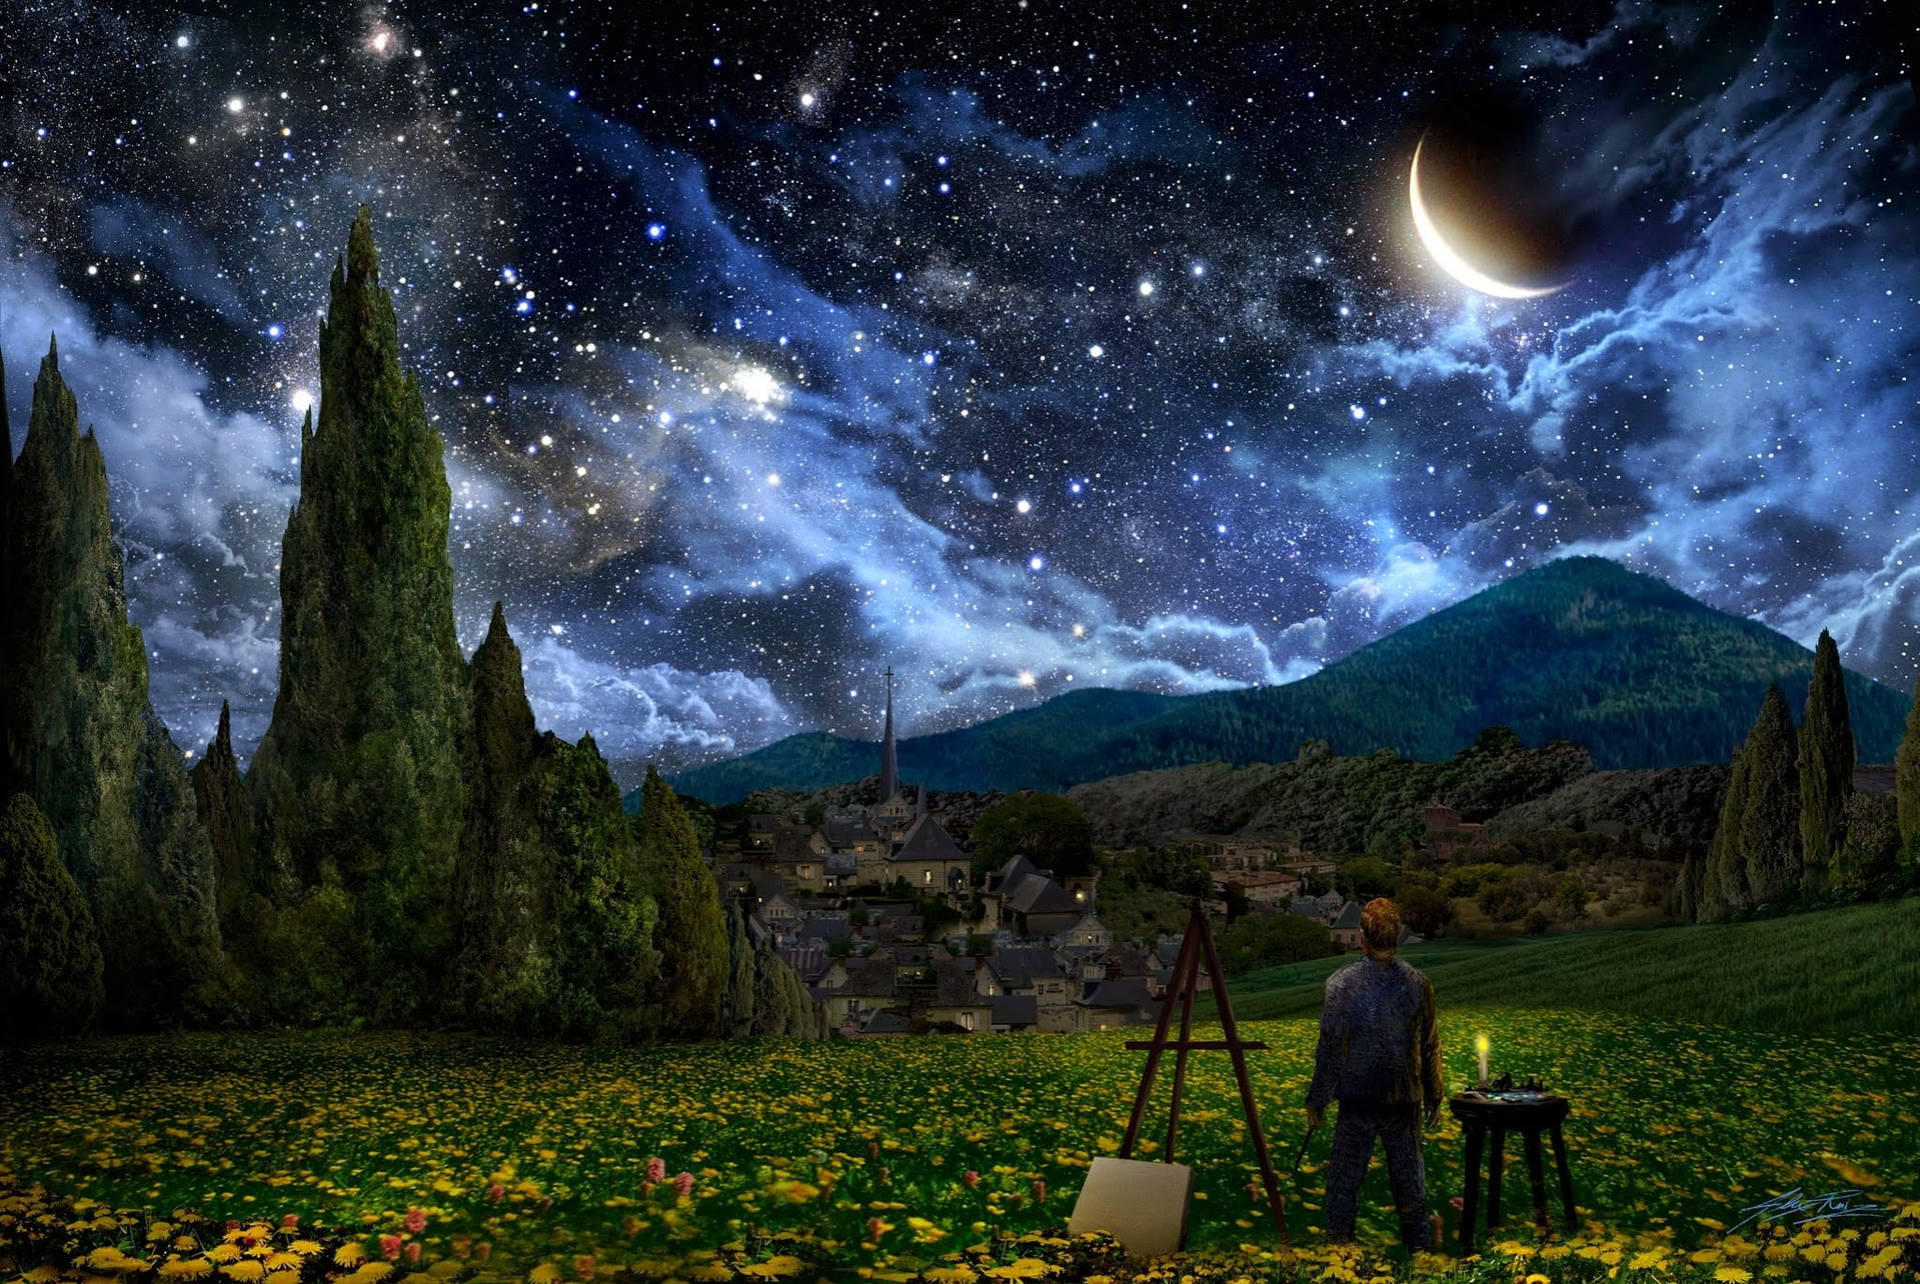 Download Awe Inspiring Vincent Van Gogh Starry Night Wallpaper | Wallpapers .com